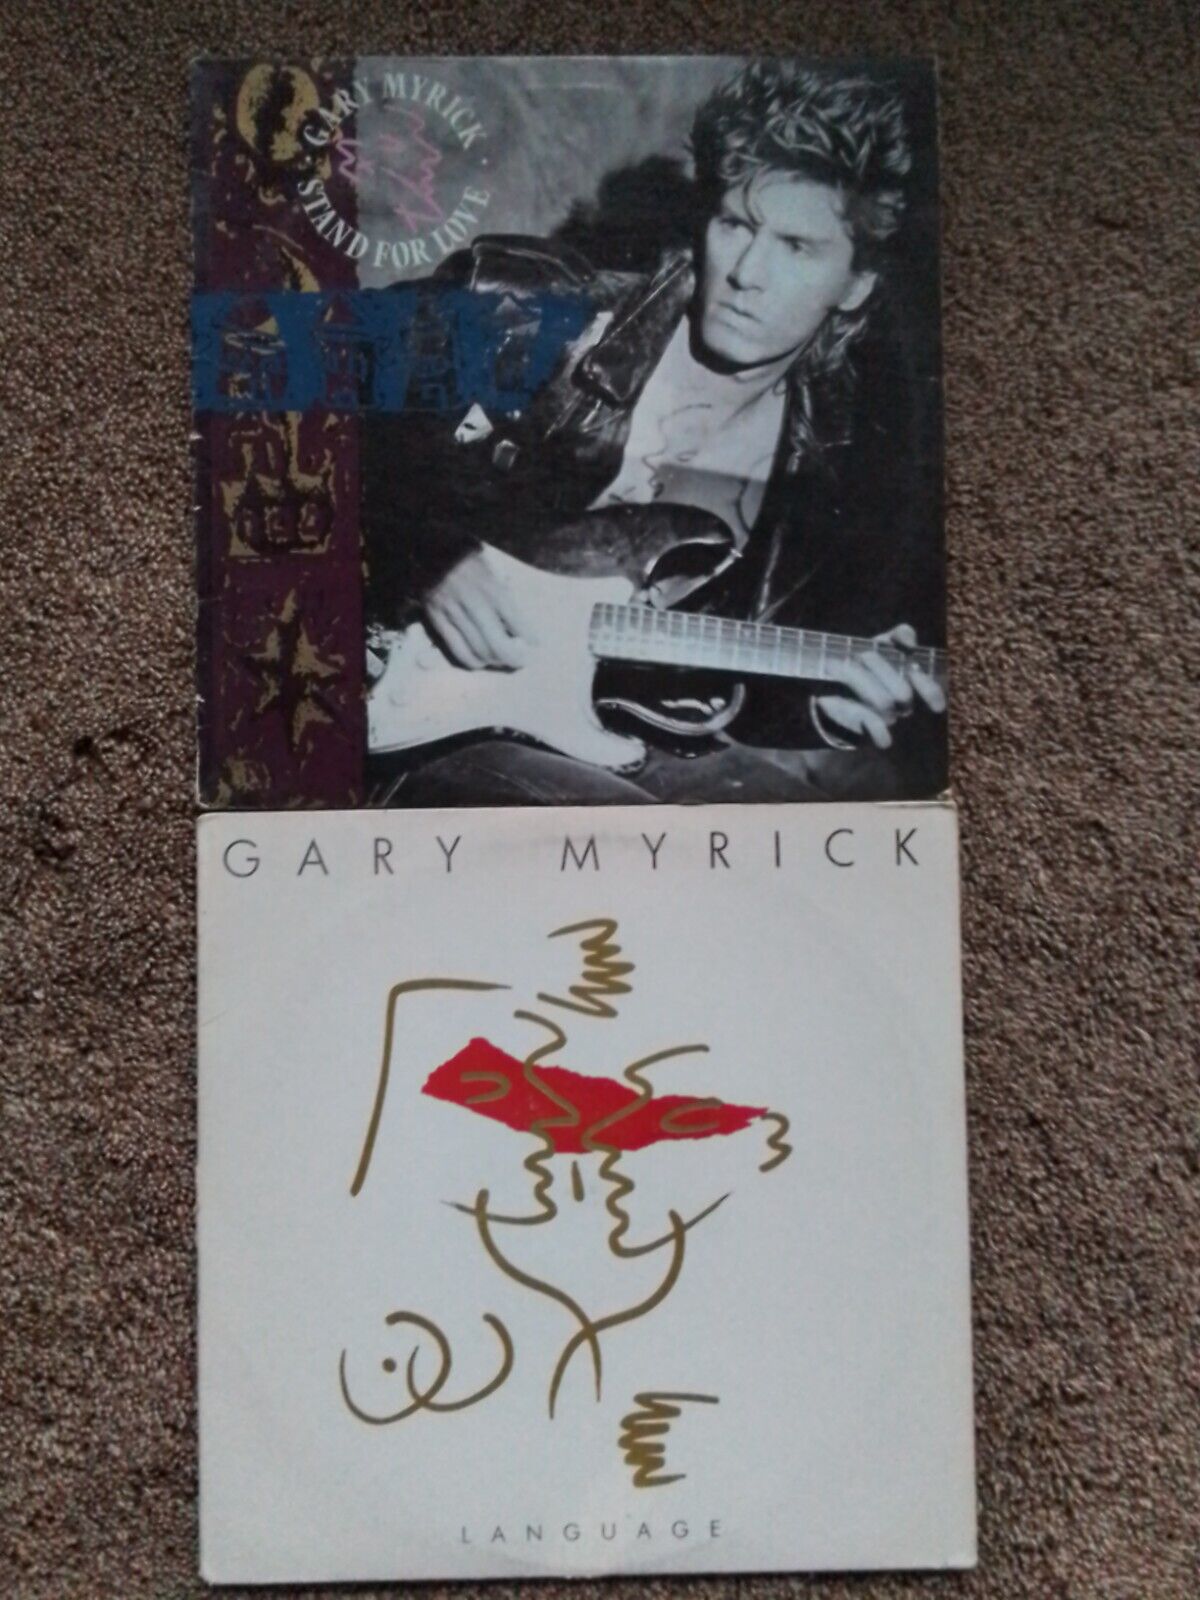 TWO VINTAGE GARY MYRICK VINYL RECORD ALBUMS